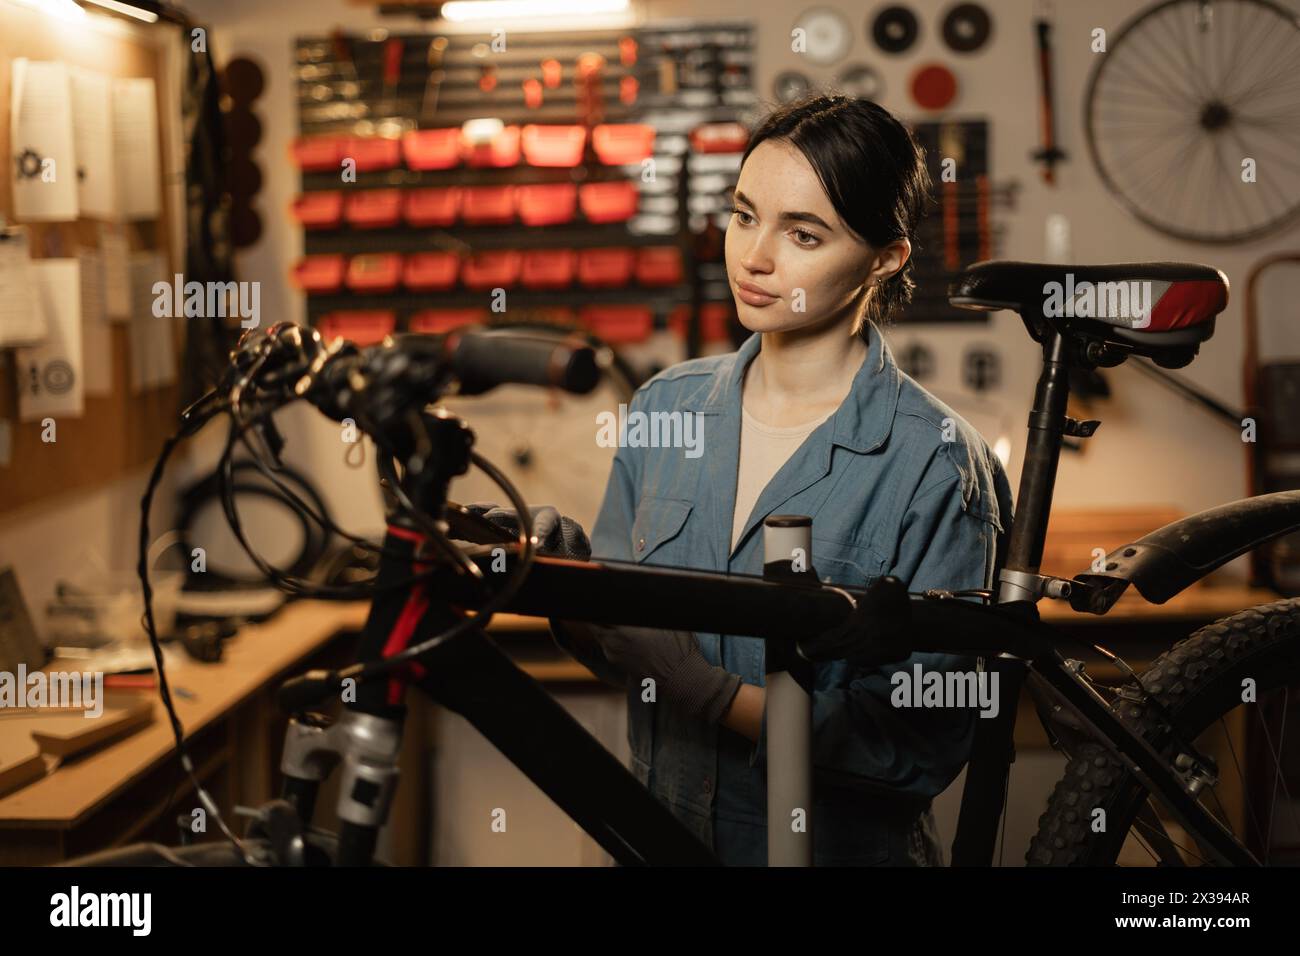 Young female mechanic repairing bike in workshop or garage. Bike workshop interior. Stock Photo